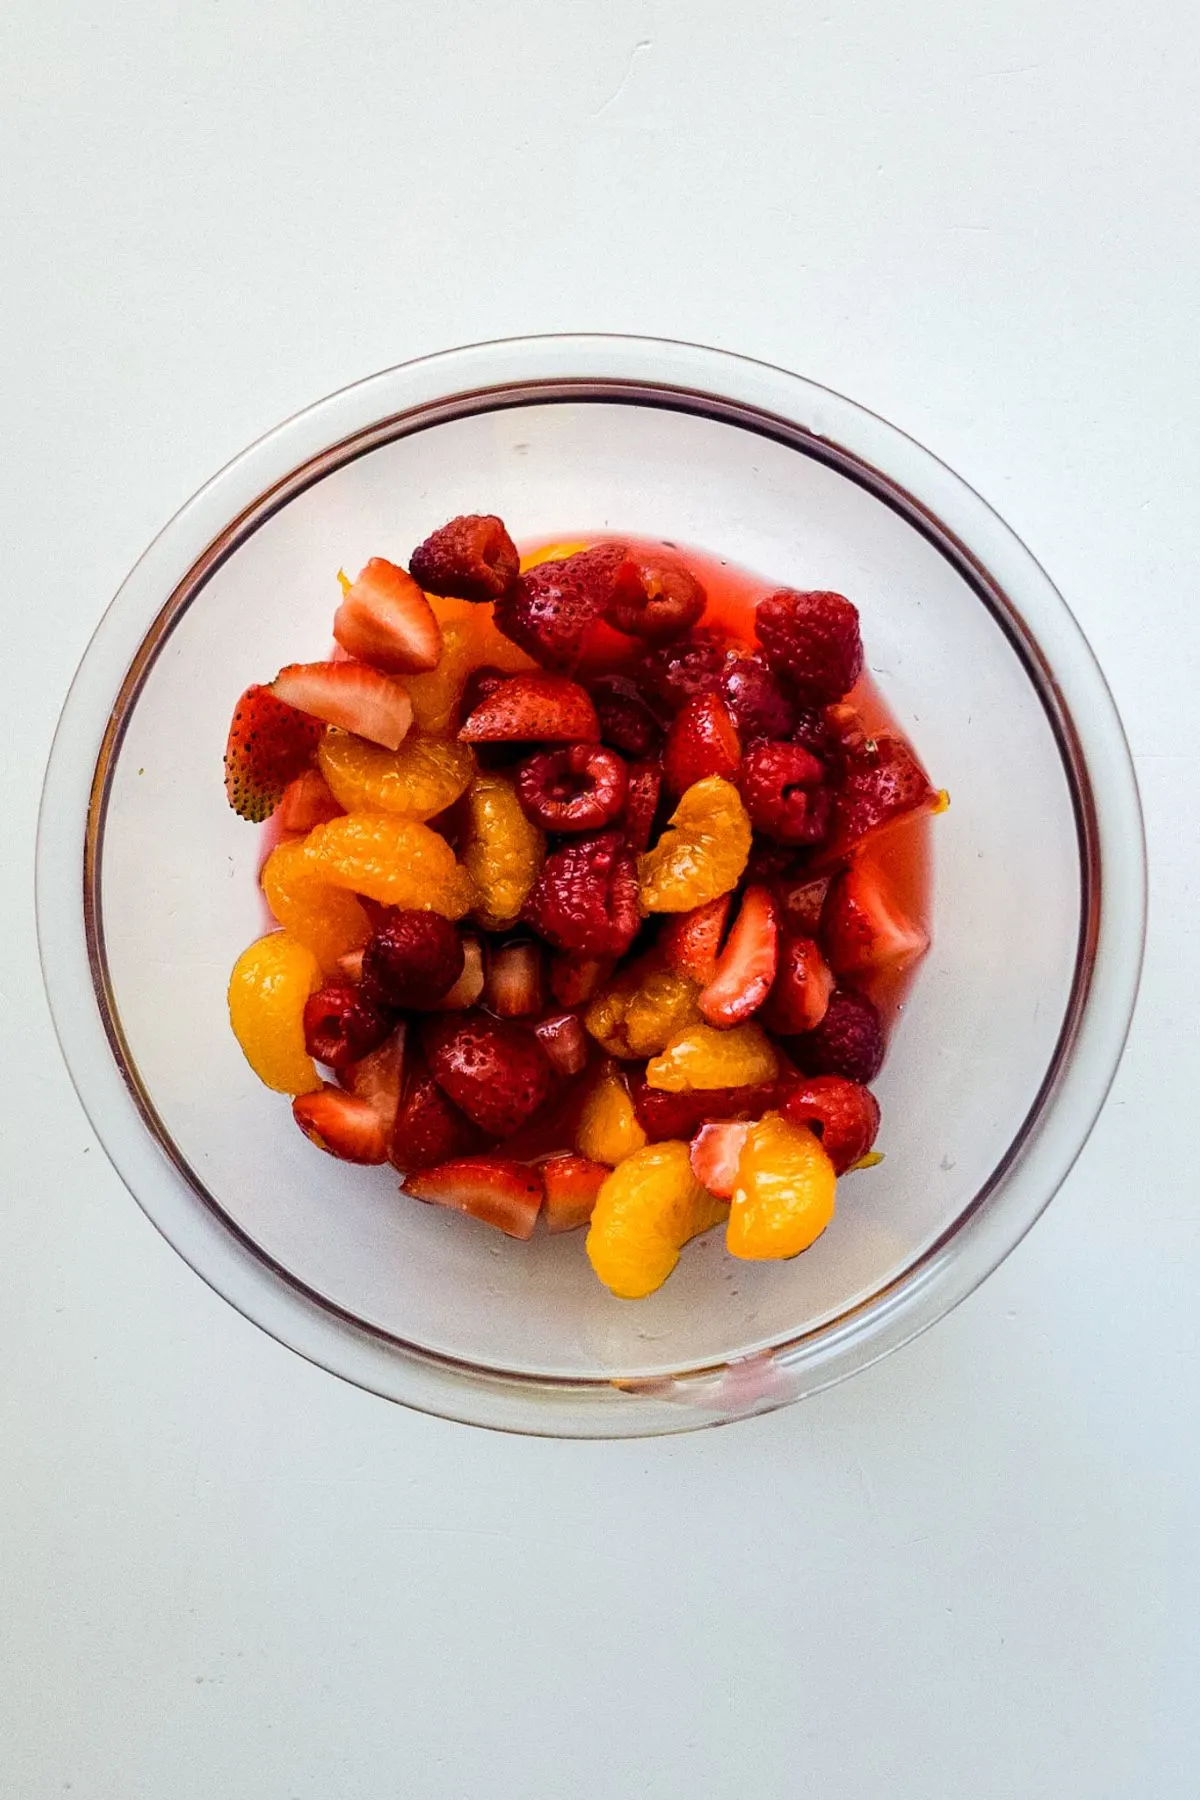 A bowl of mandarin orange slices, raspberries, strawberry slices, and dressing.